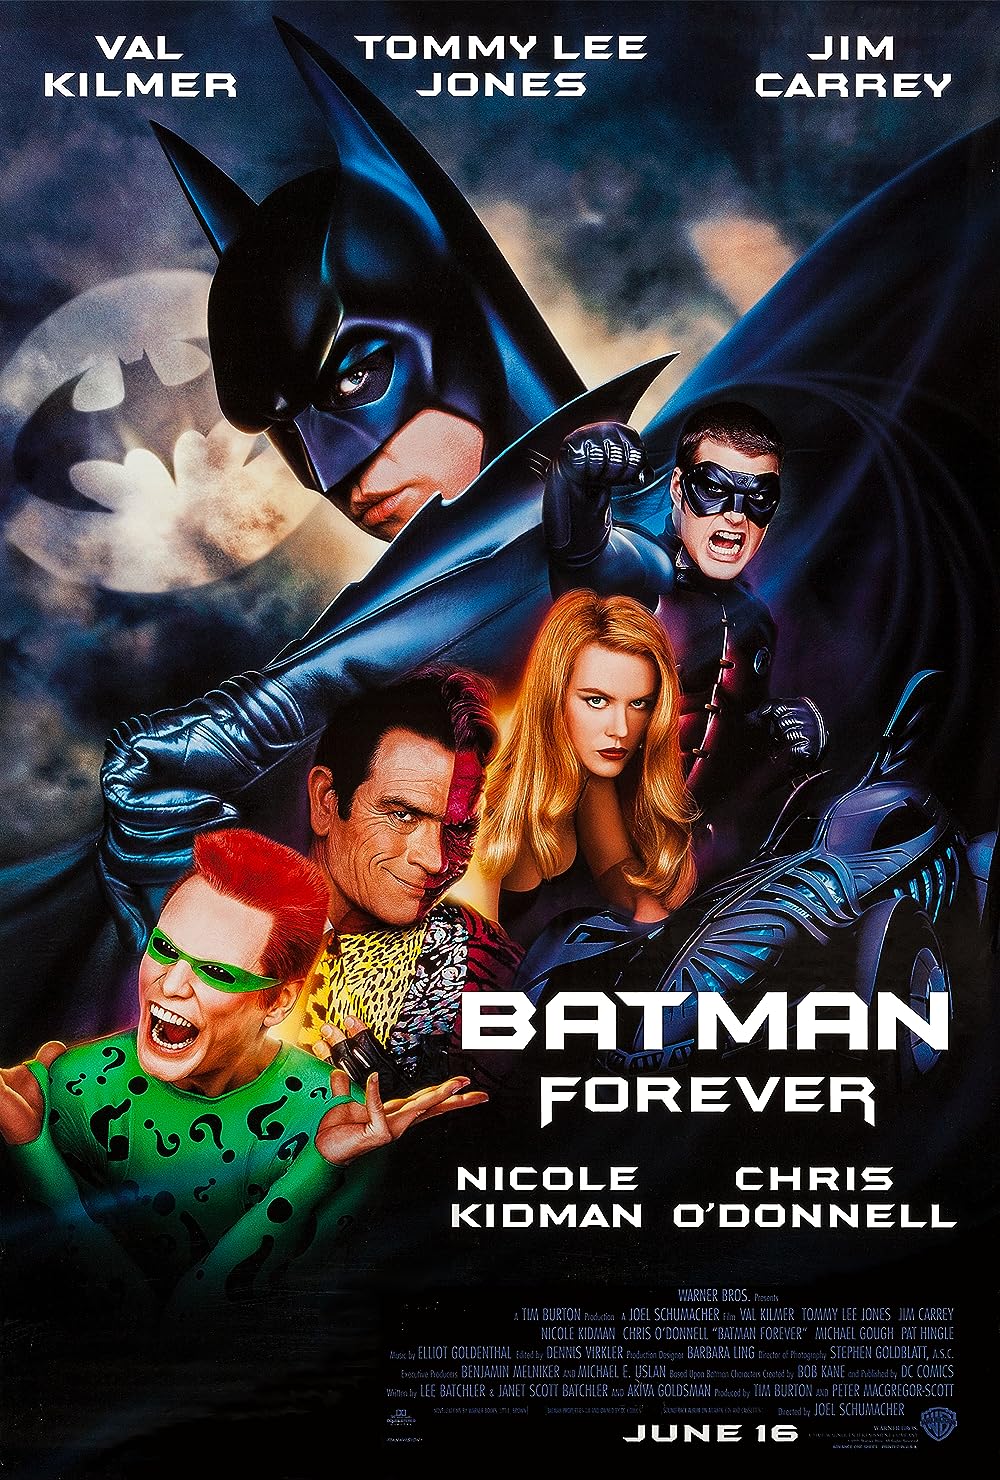 Batman Forever- DC comics movies in order